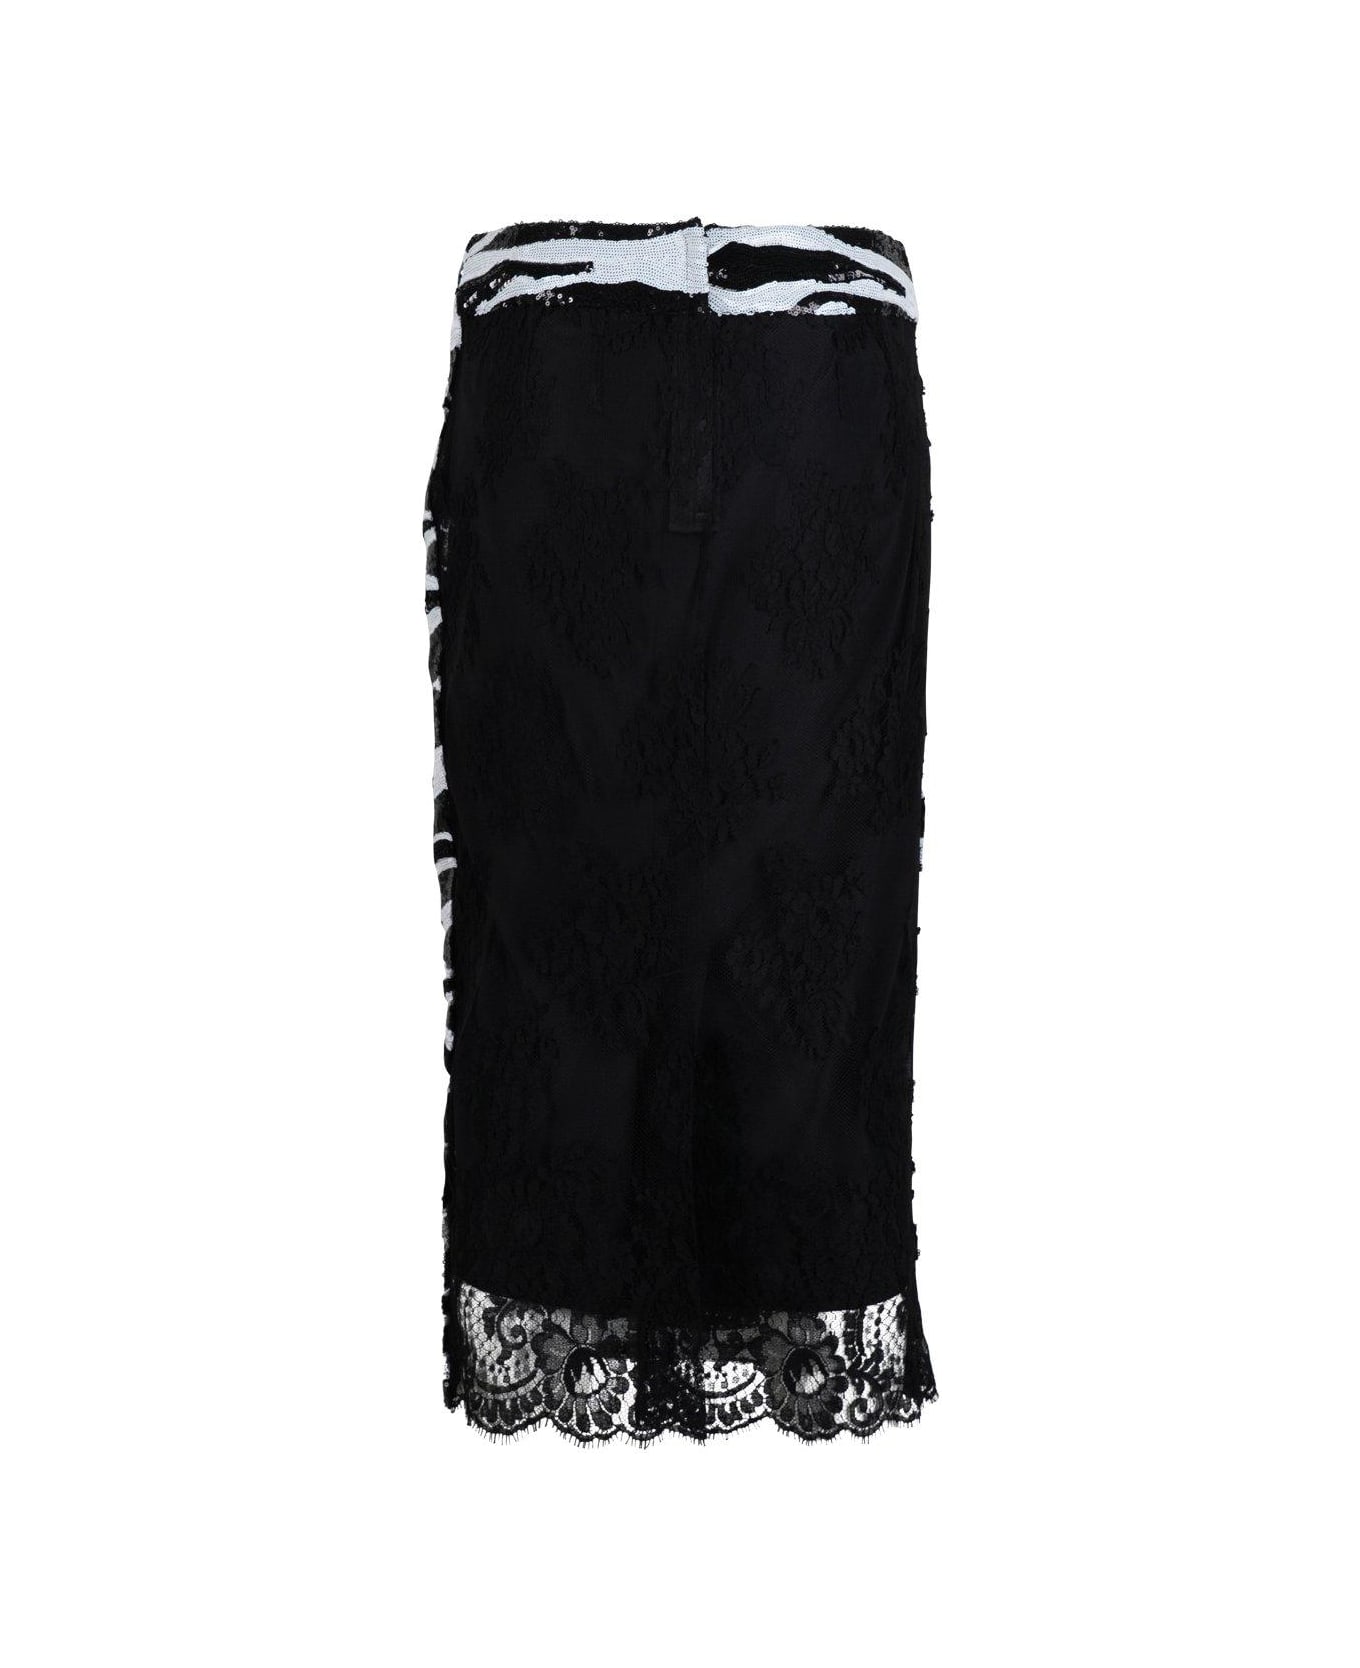 Dolce & Gabbana Sequin Embellished Pencil Skirt - Bianco/nero